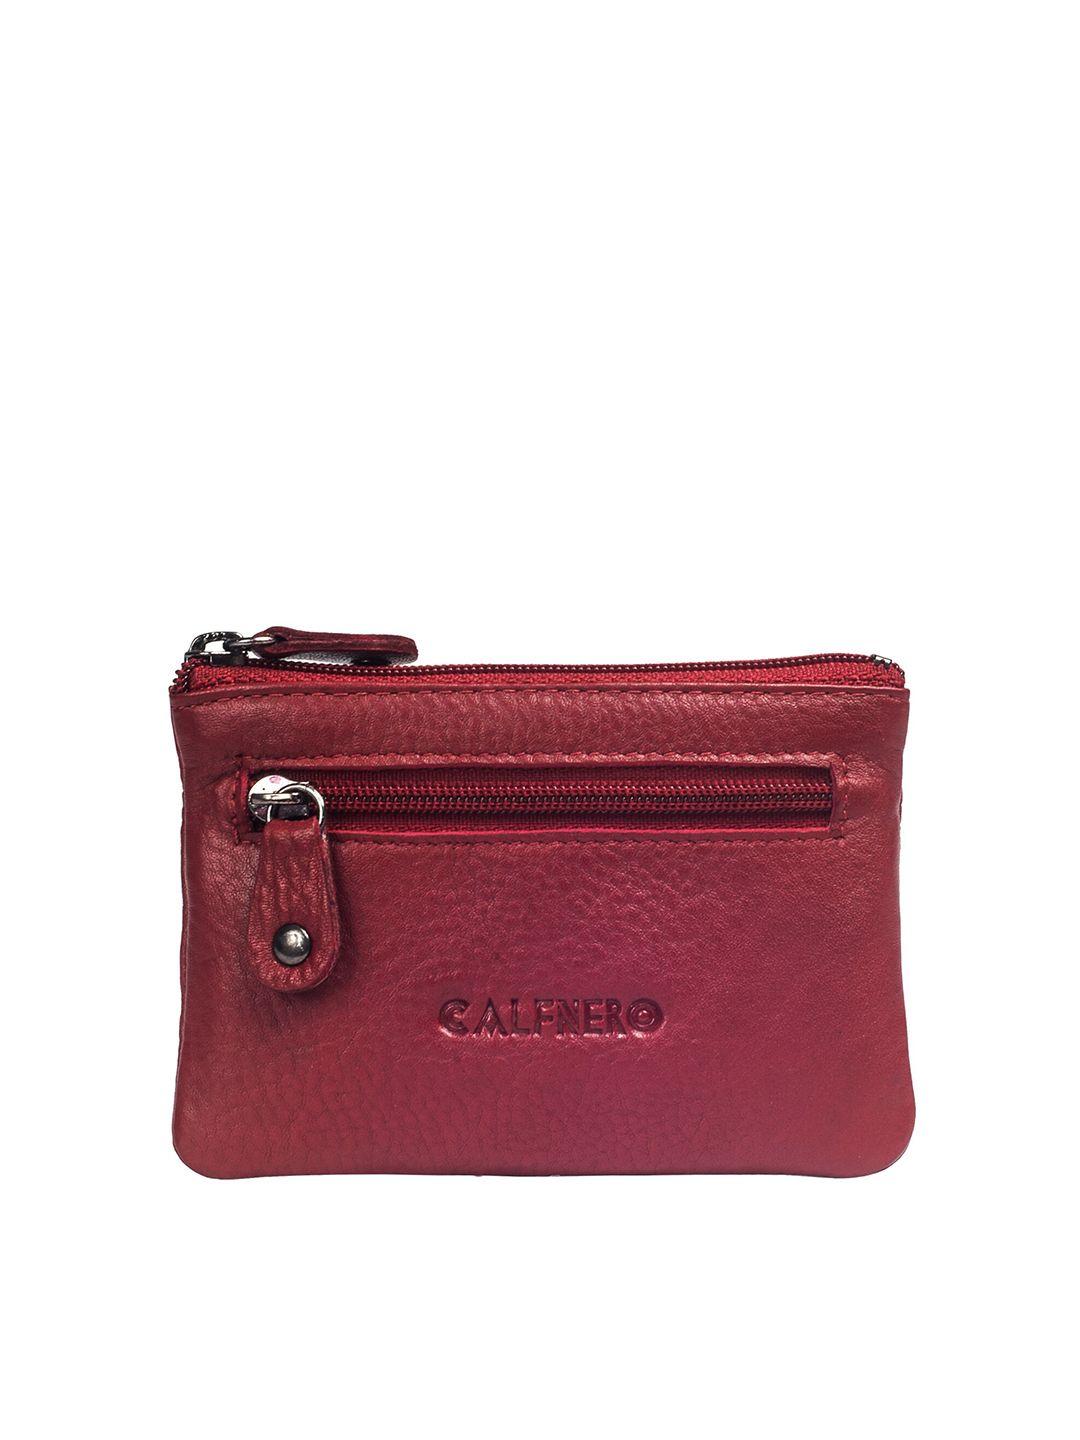 calfnero unisex red leather zip around wallet